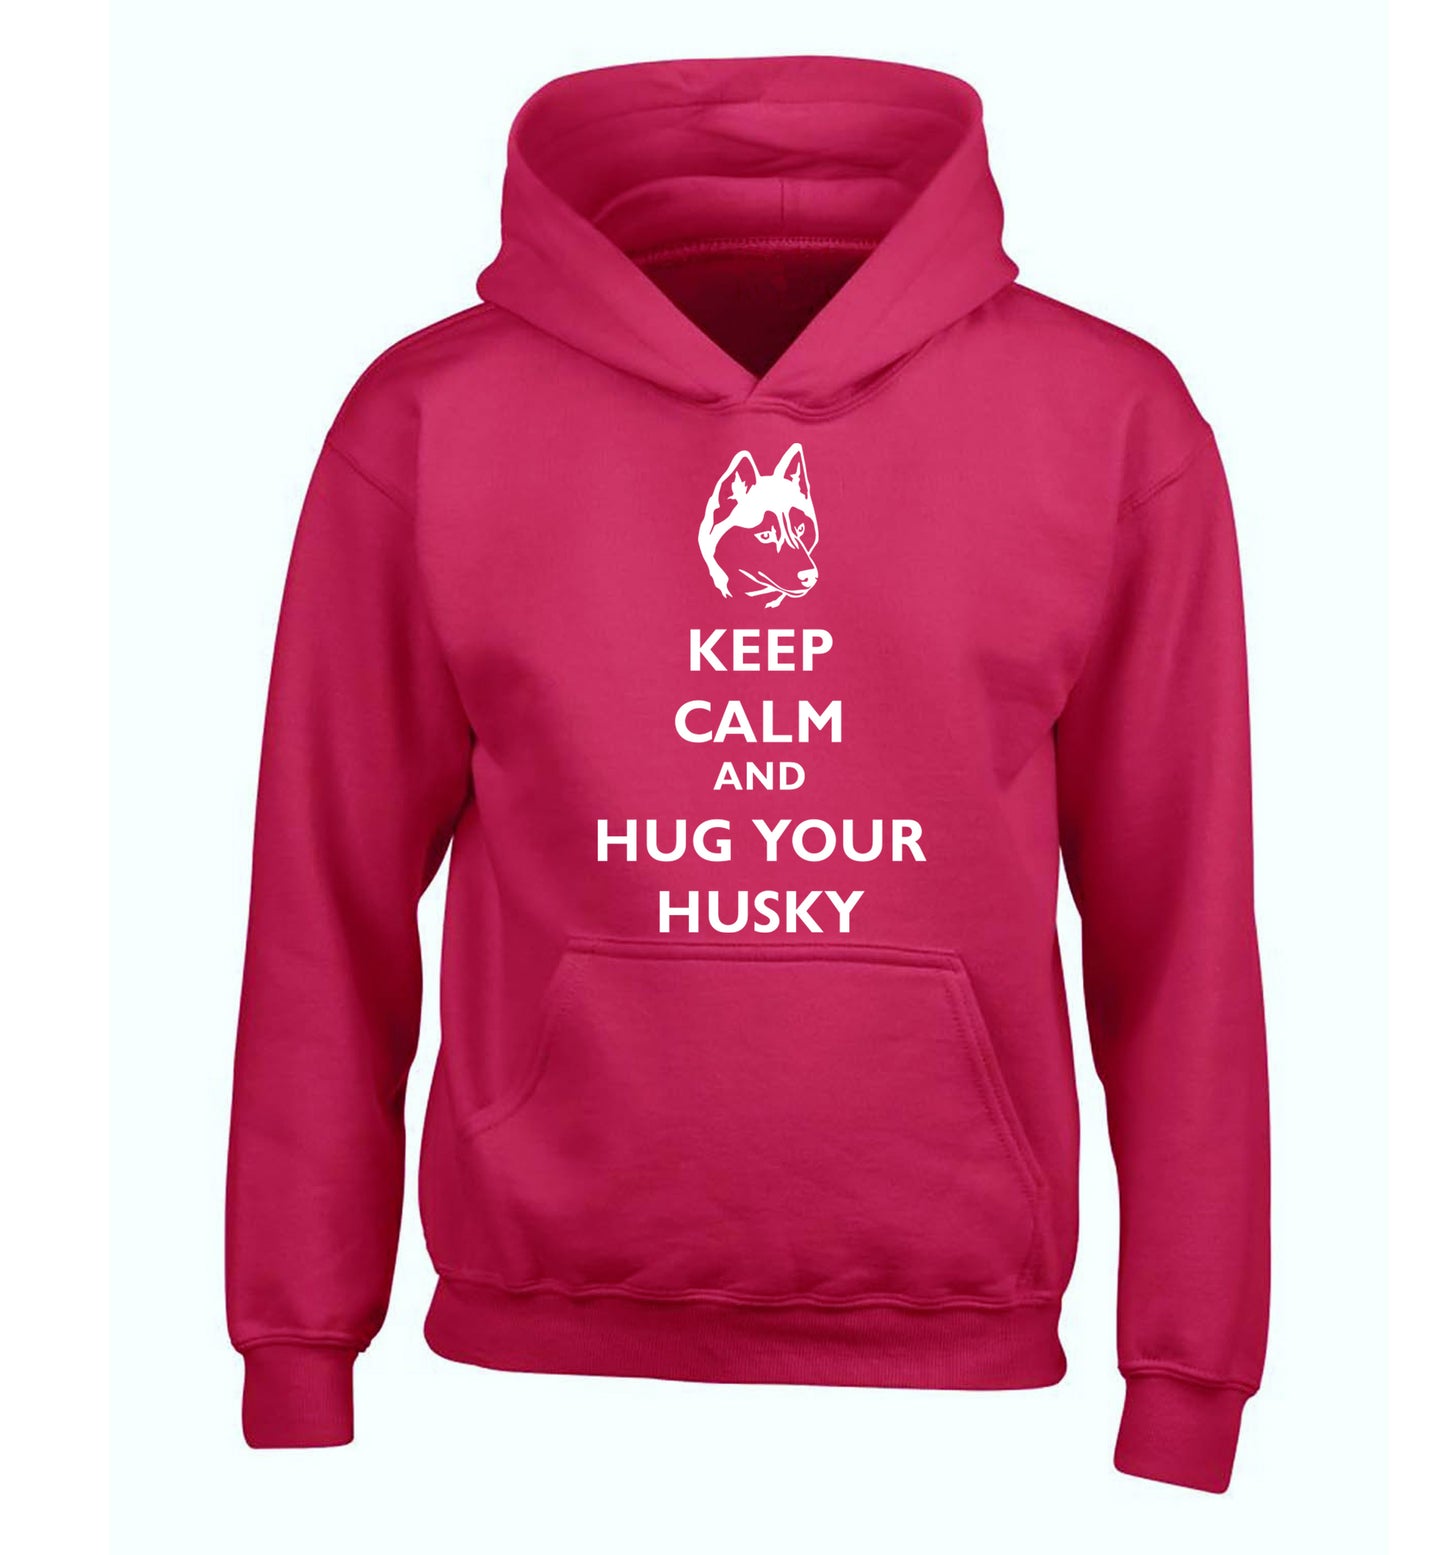 Keep calm and hug your husky children's pink hoodie 12-13 Years